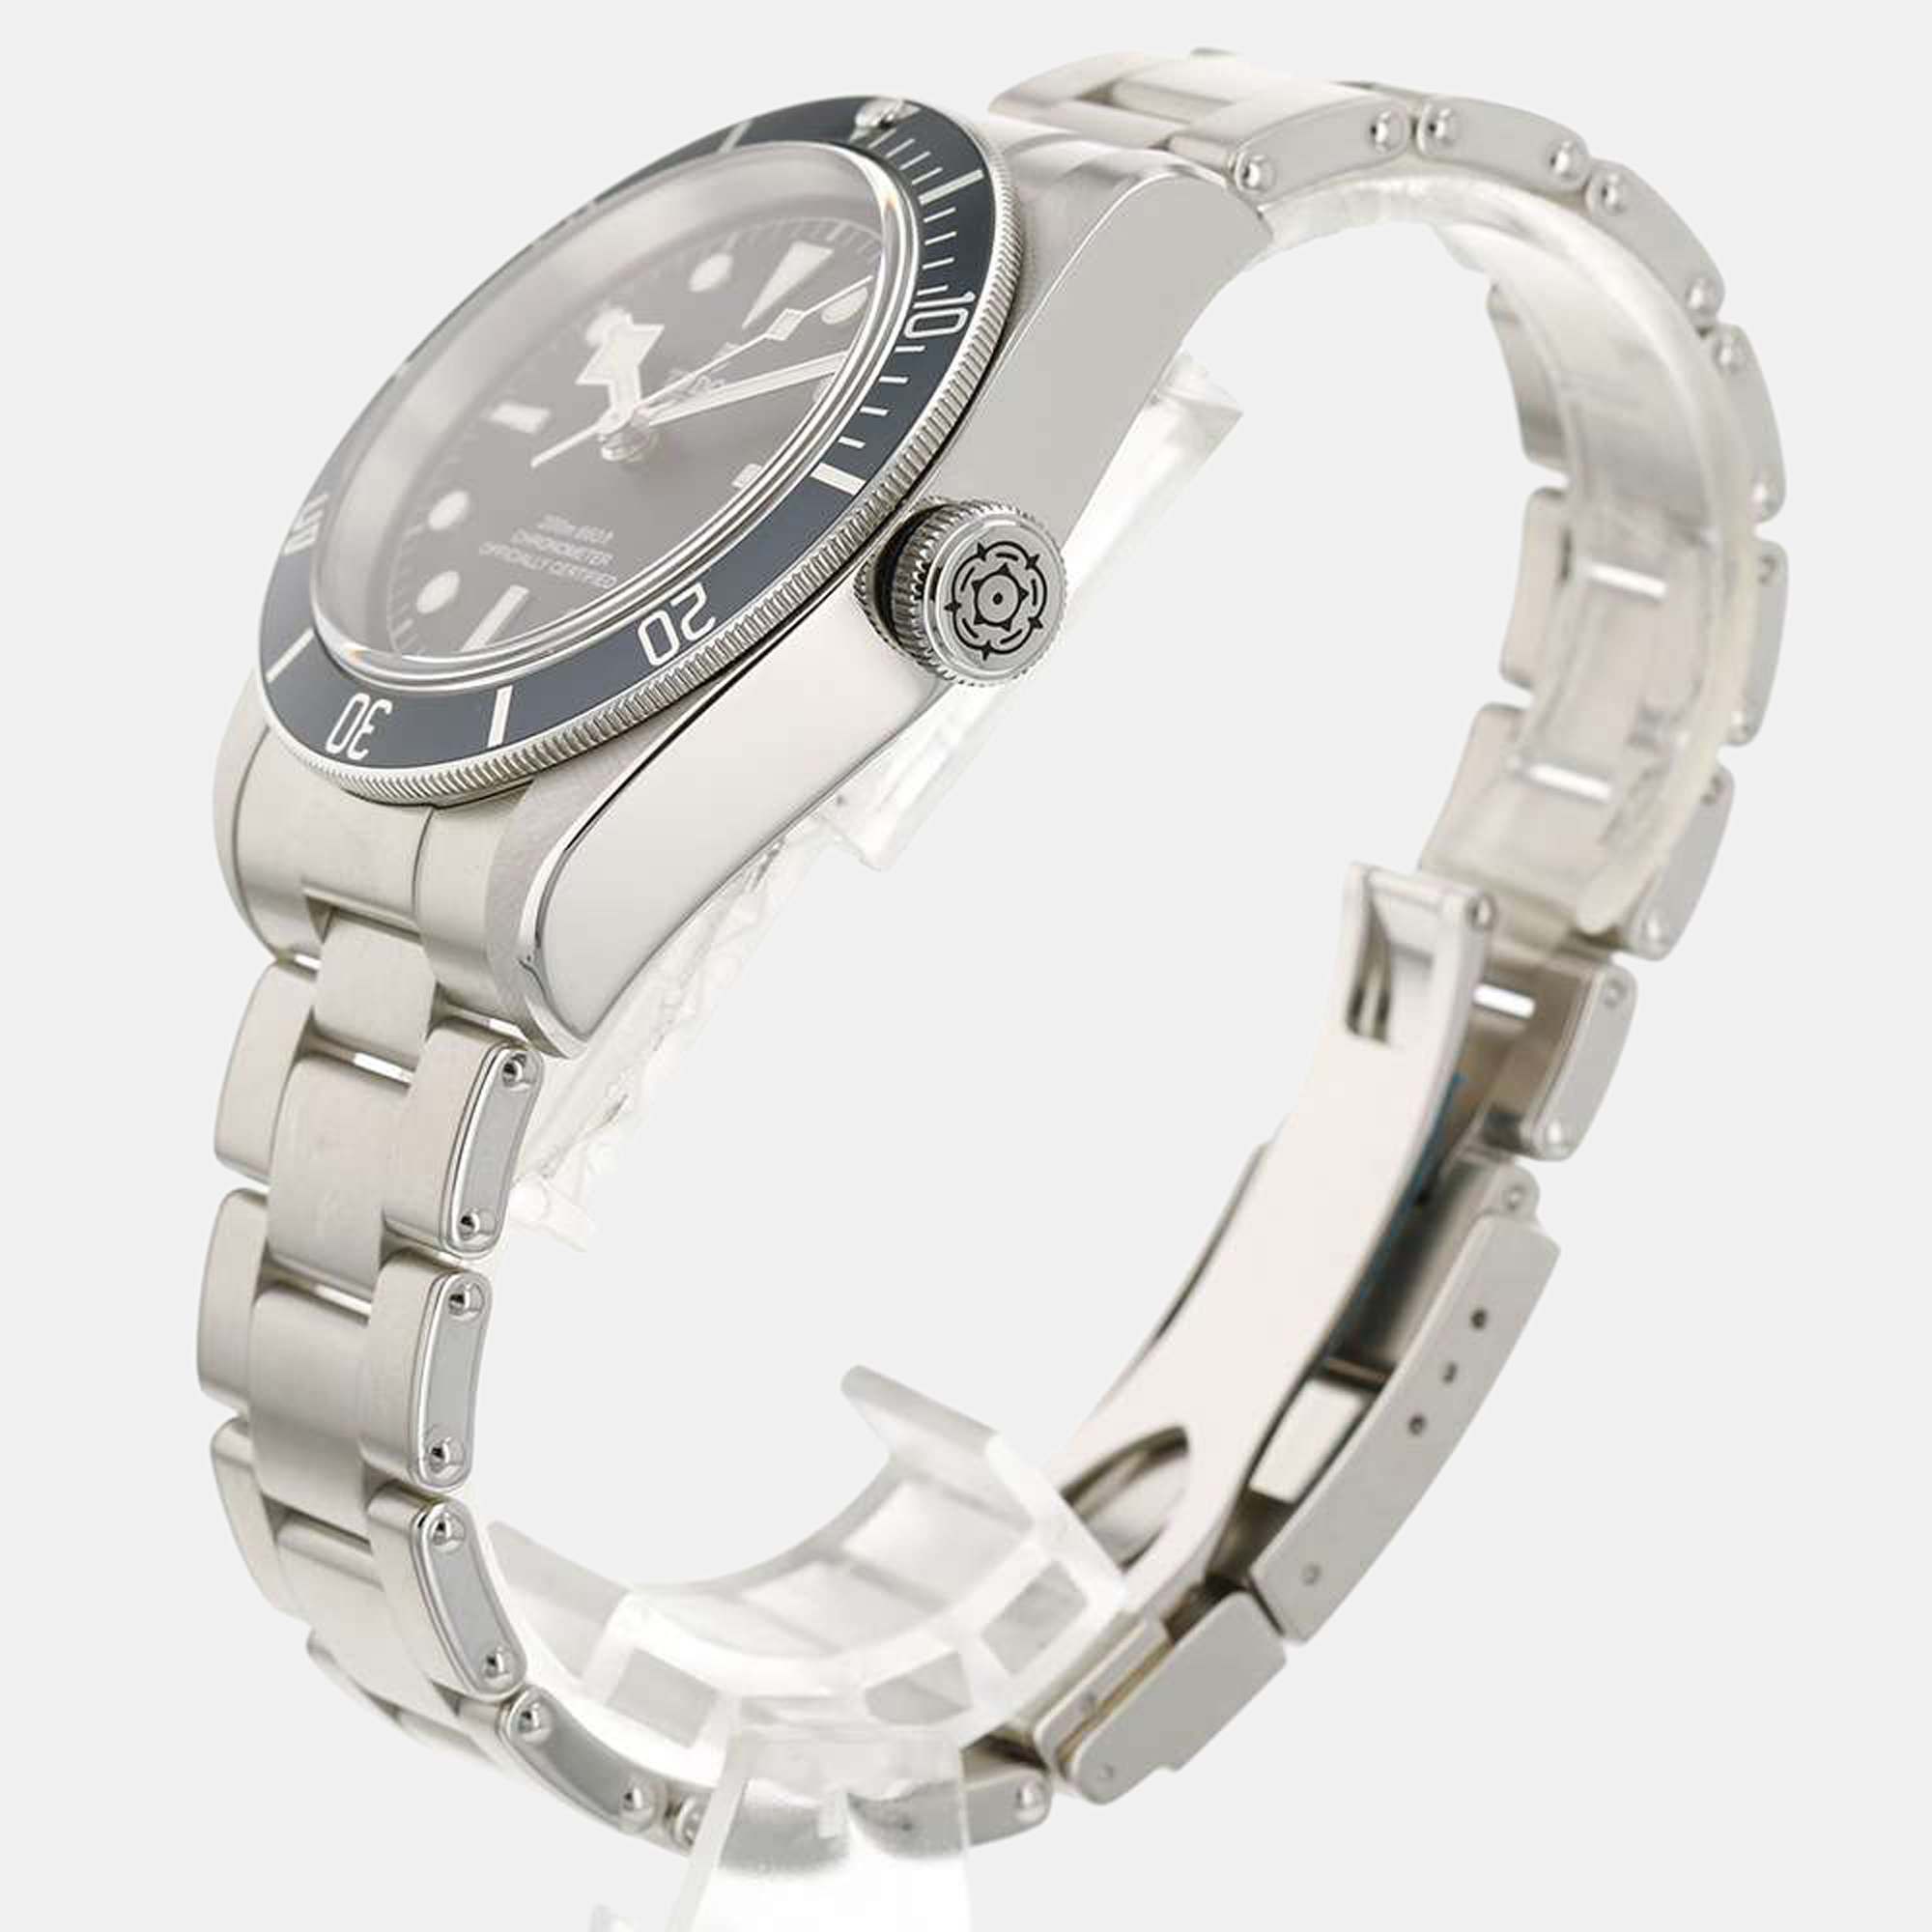 

Tudor Black Stainless Steel Black Bay 79230B Automatic Men's Wristwatch 41 mm